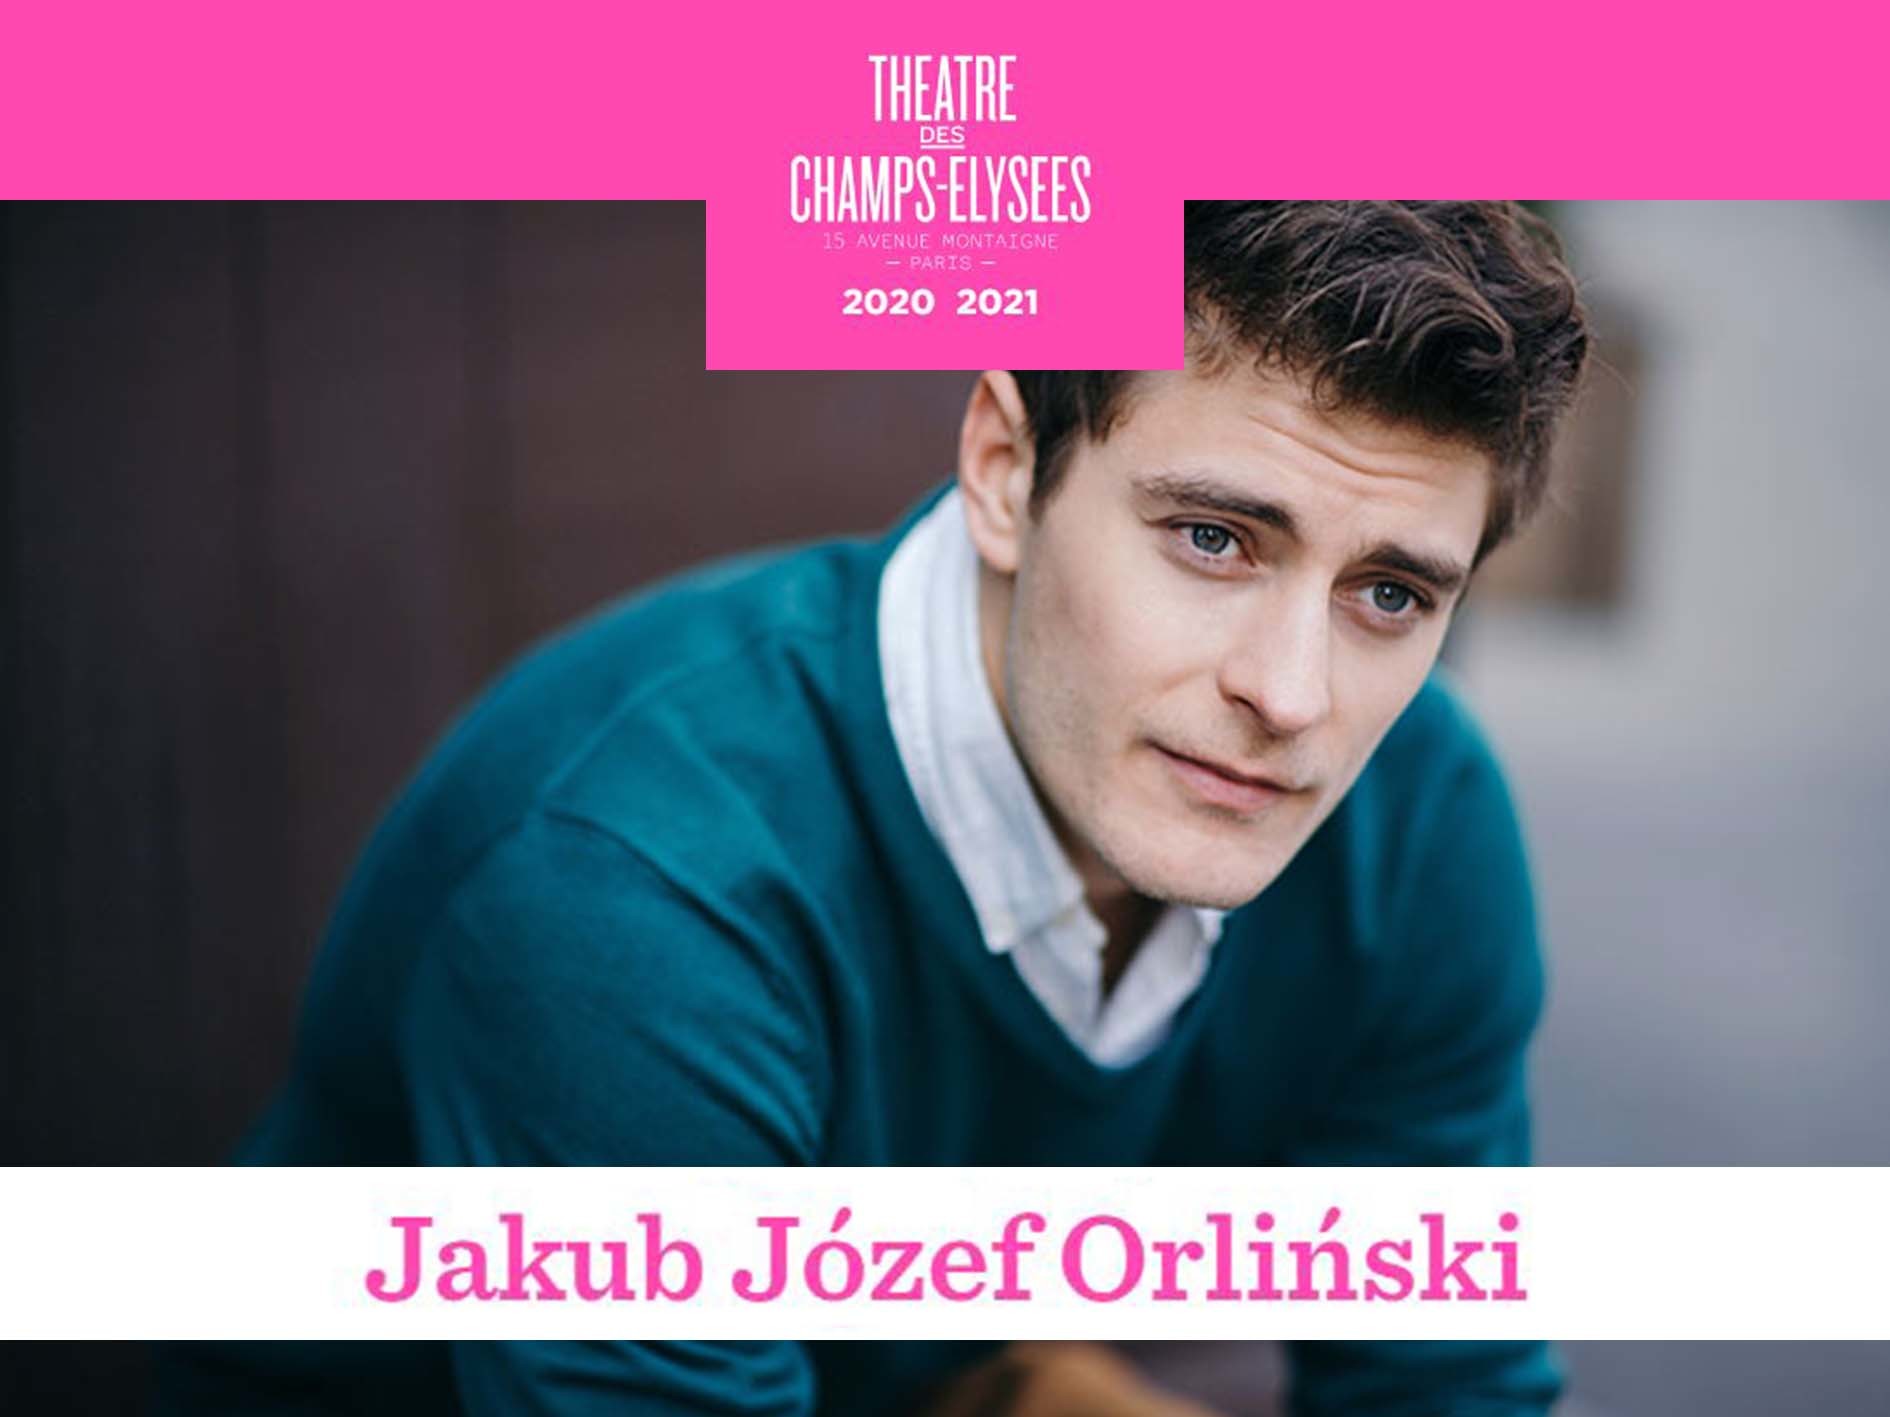 Concert Jakub Józef Orliński - Théâtre des Champs-Élysées (2021